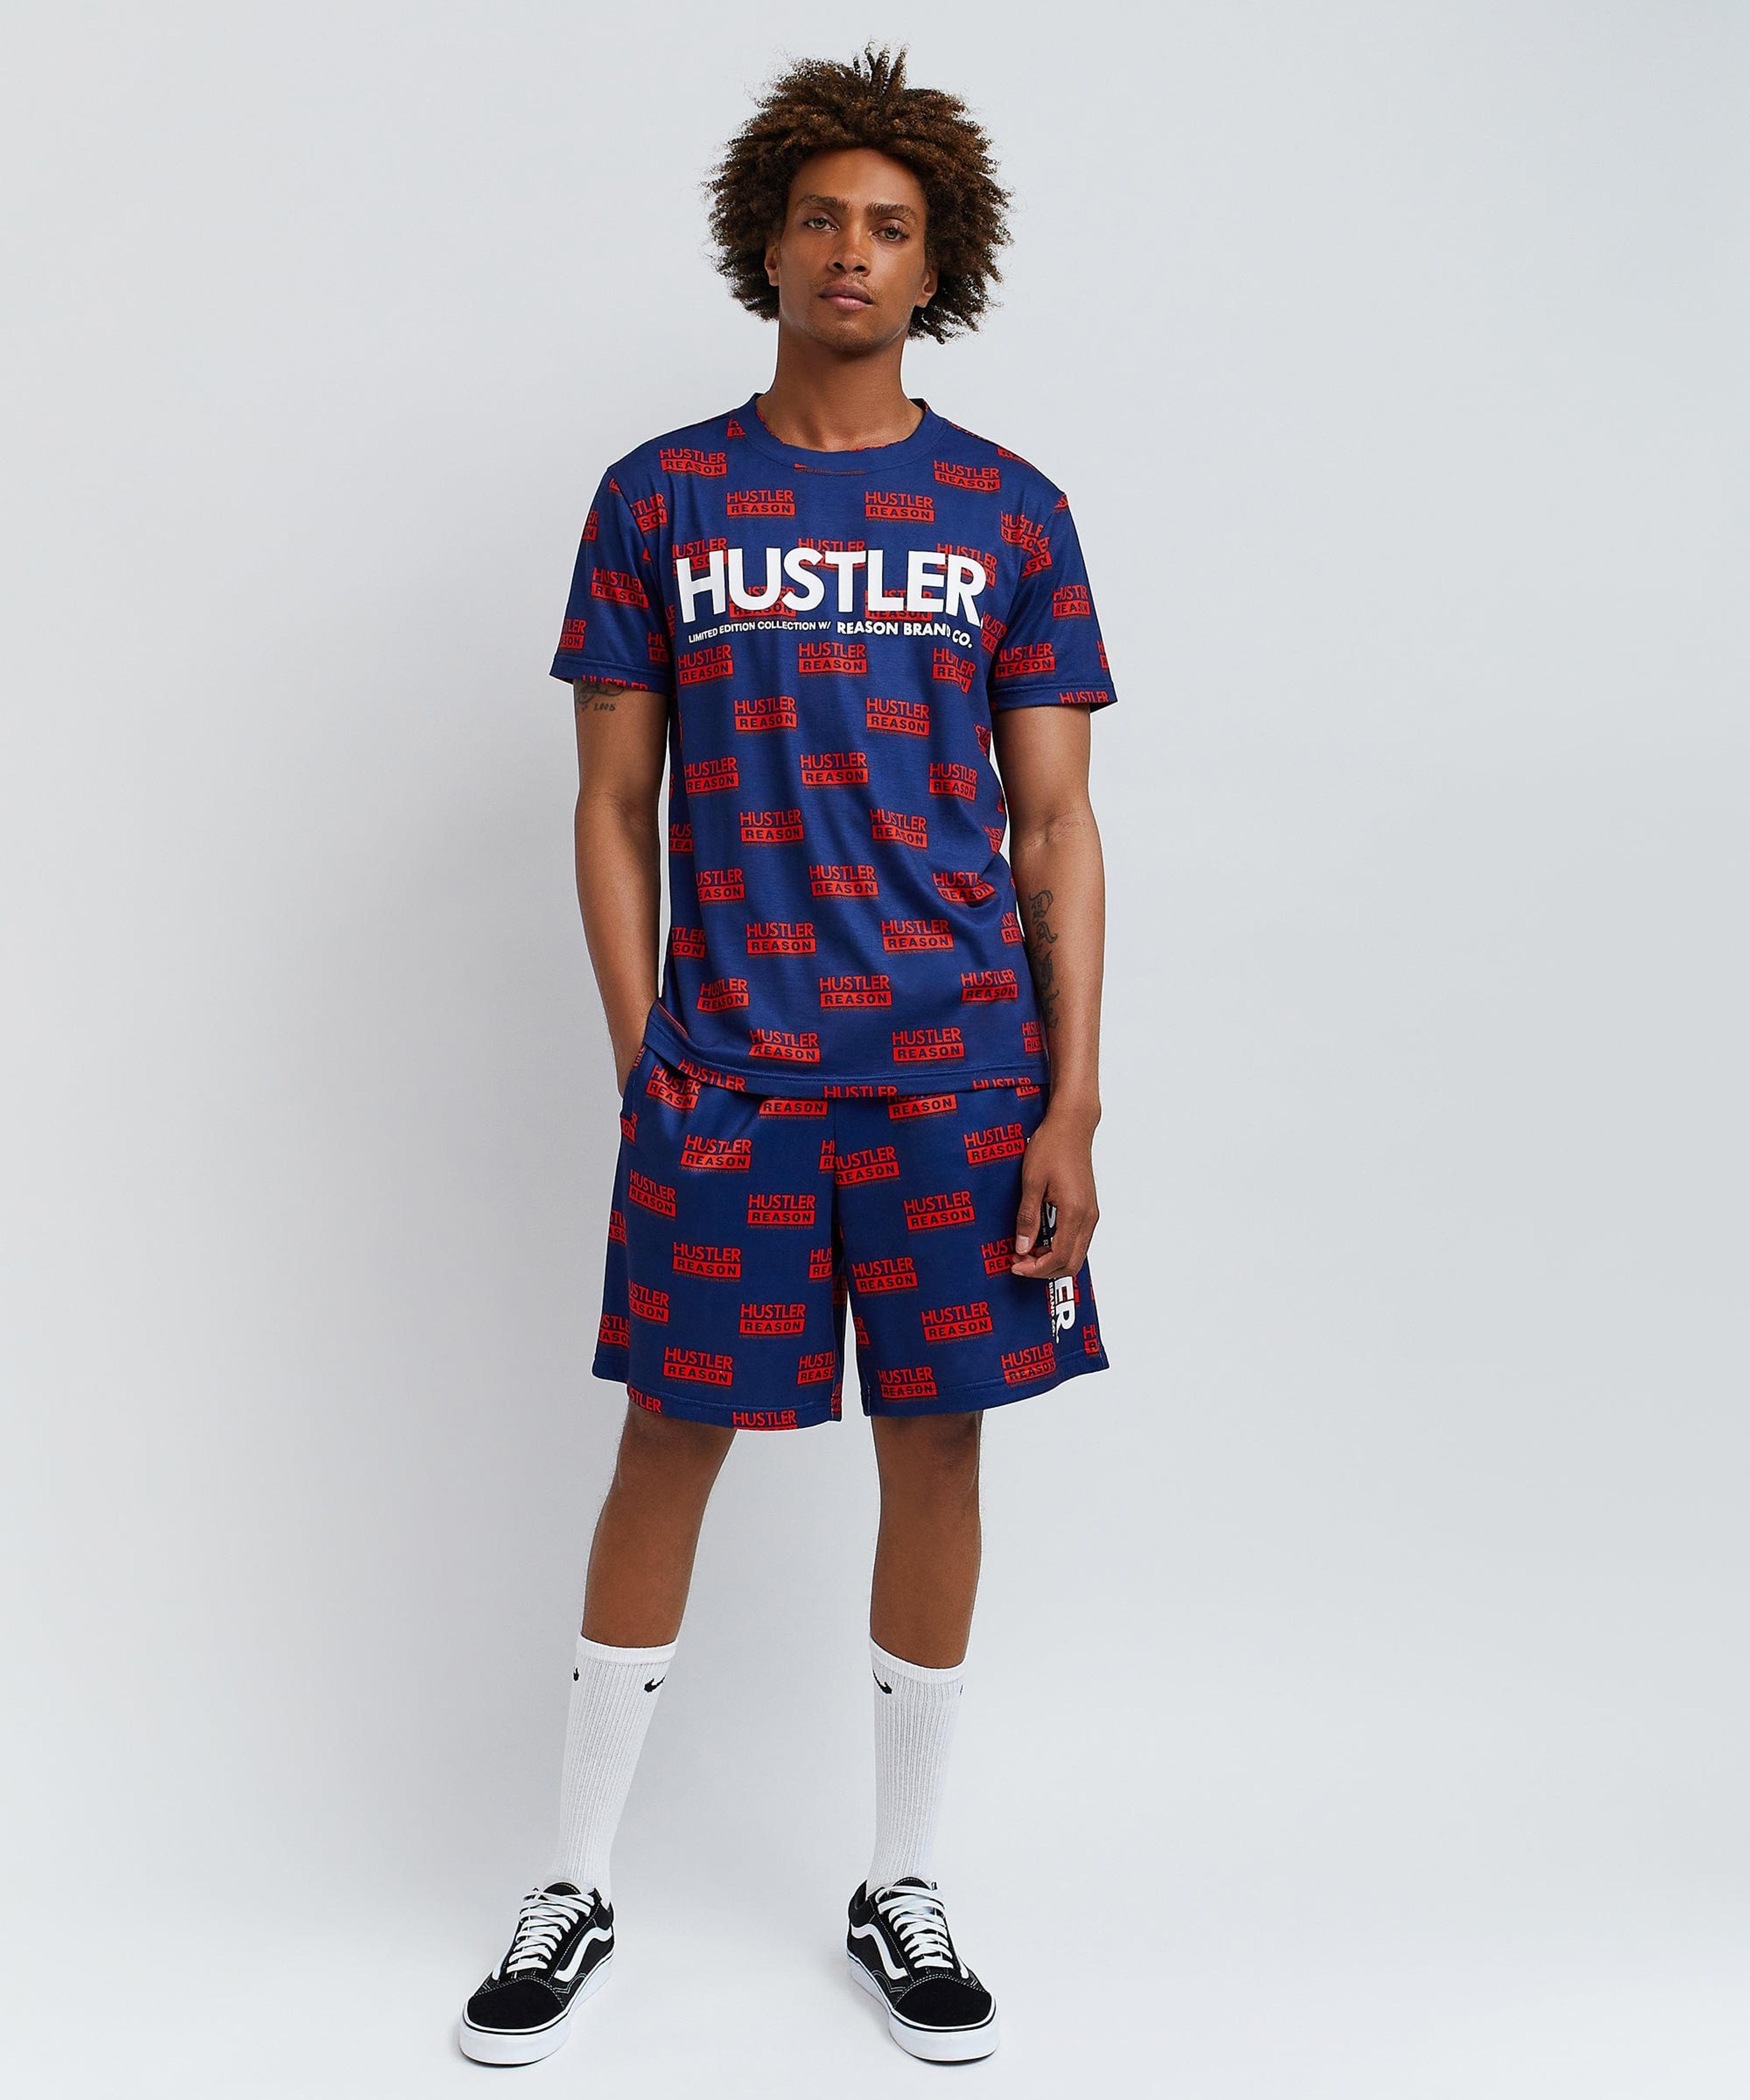 Hustler Logo Tee And Shorts Set